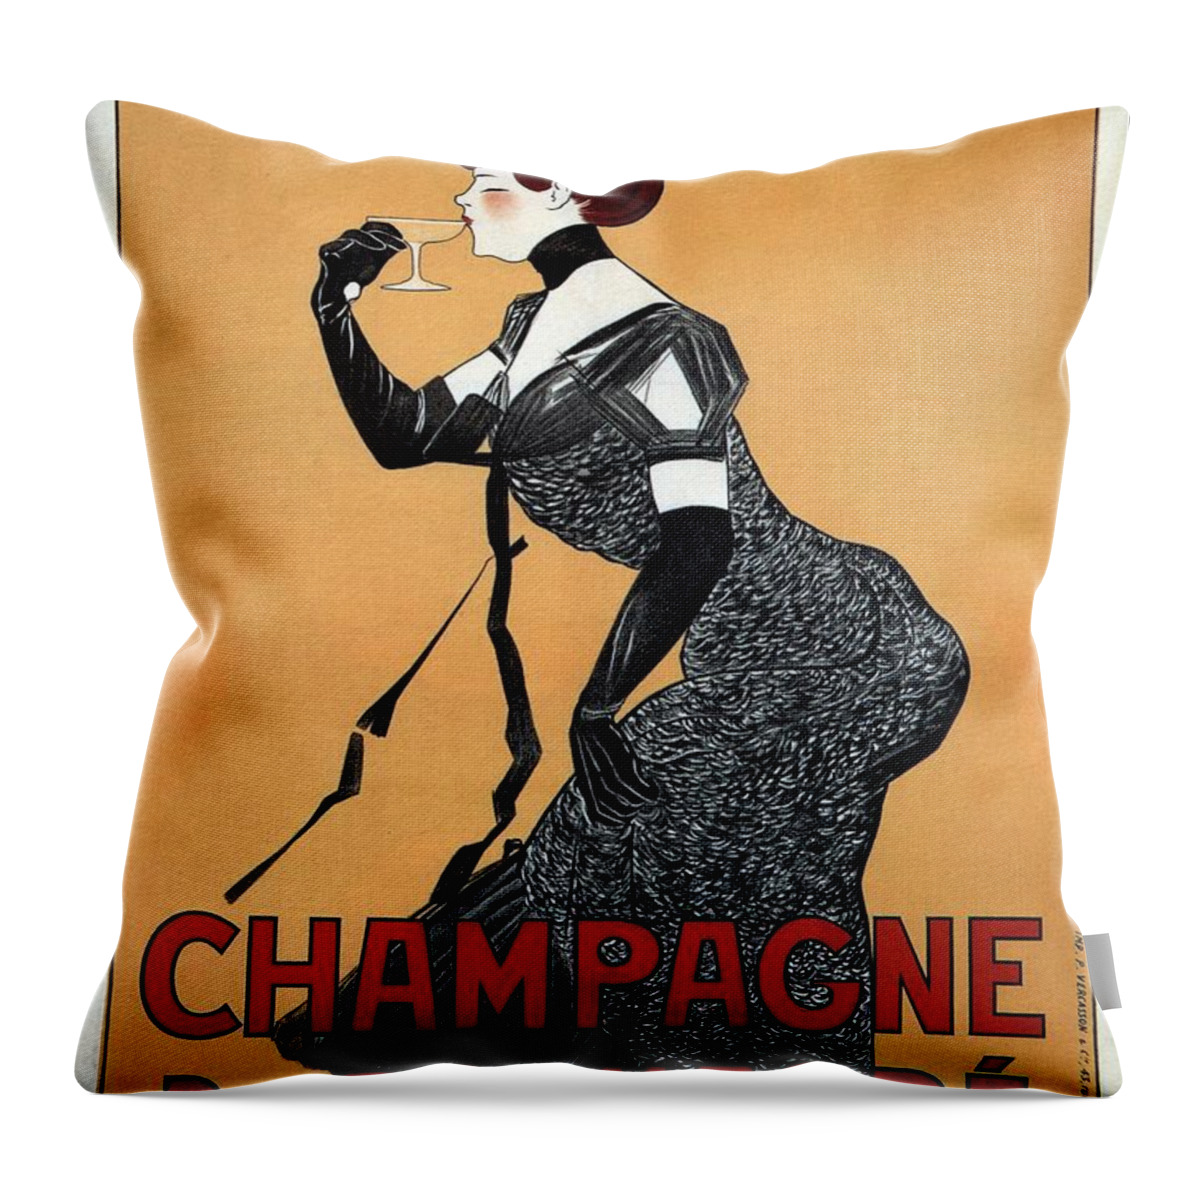 Champagne De Rochegre Throw Pillow featuring the mixed media Champagne De Rochegre - Epernay, France - Vintage Advertising Poster by Studio Grafiikka